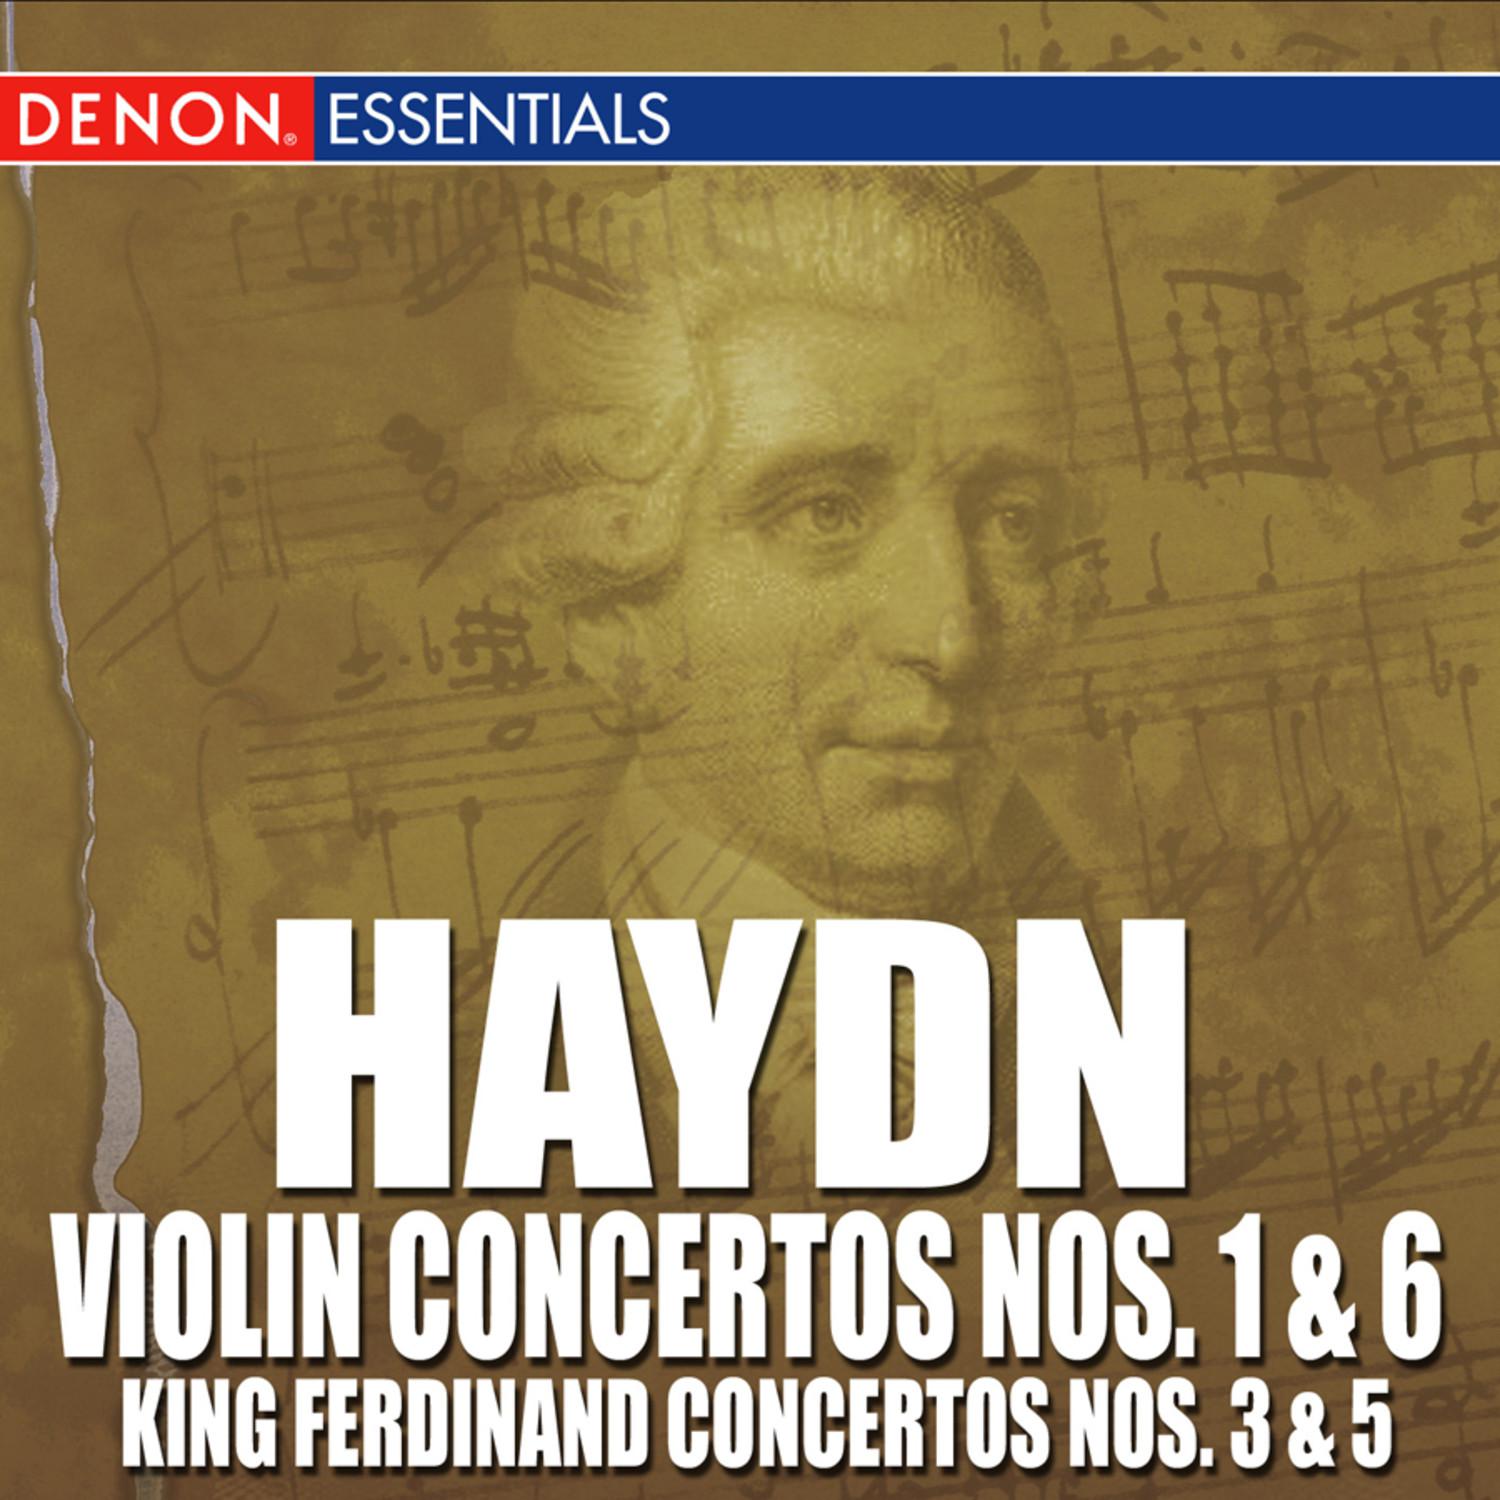 Concerto No. 5 for King Ferdinand IV. of Napoli in F Major, Hob. VII / 5 "Lyren Concerto No. 5": II. Andante